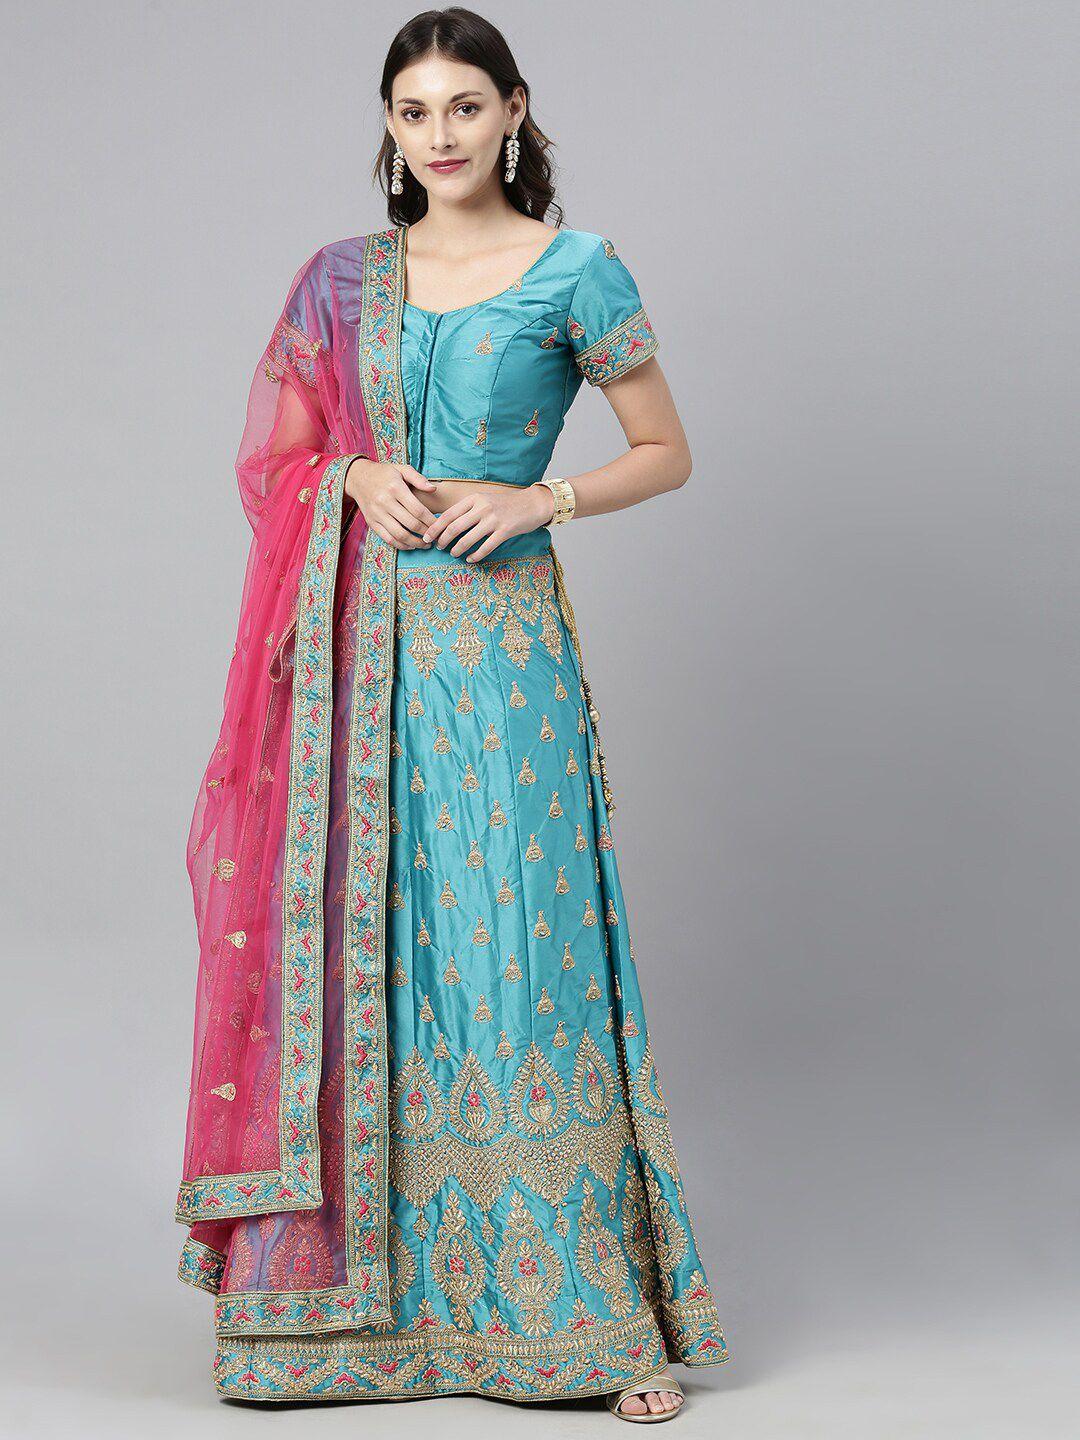 the-chennai-silks-green-&-pink-embroidered-ready-to-wear-lehenga-choli-with-dupatta